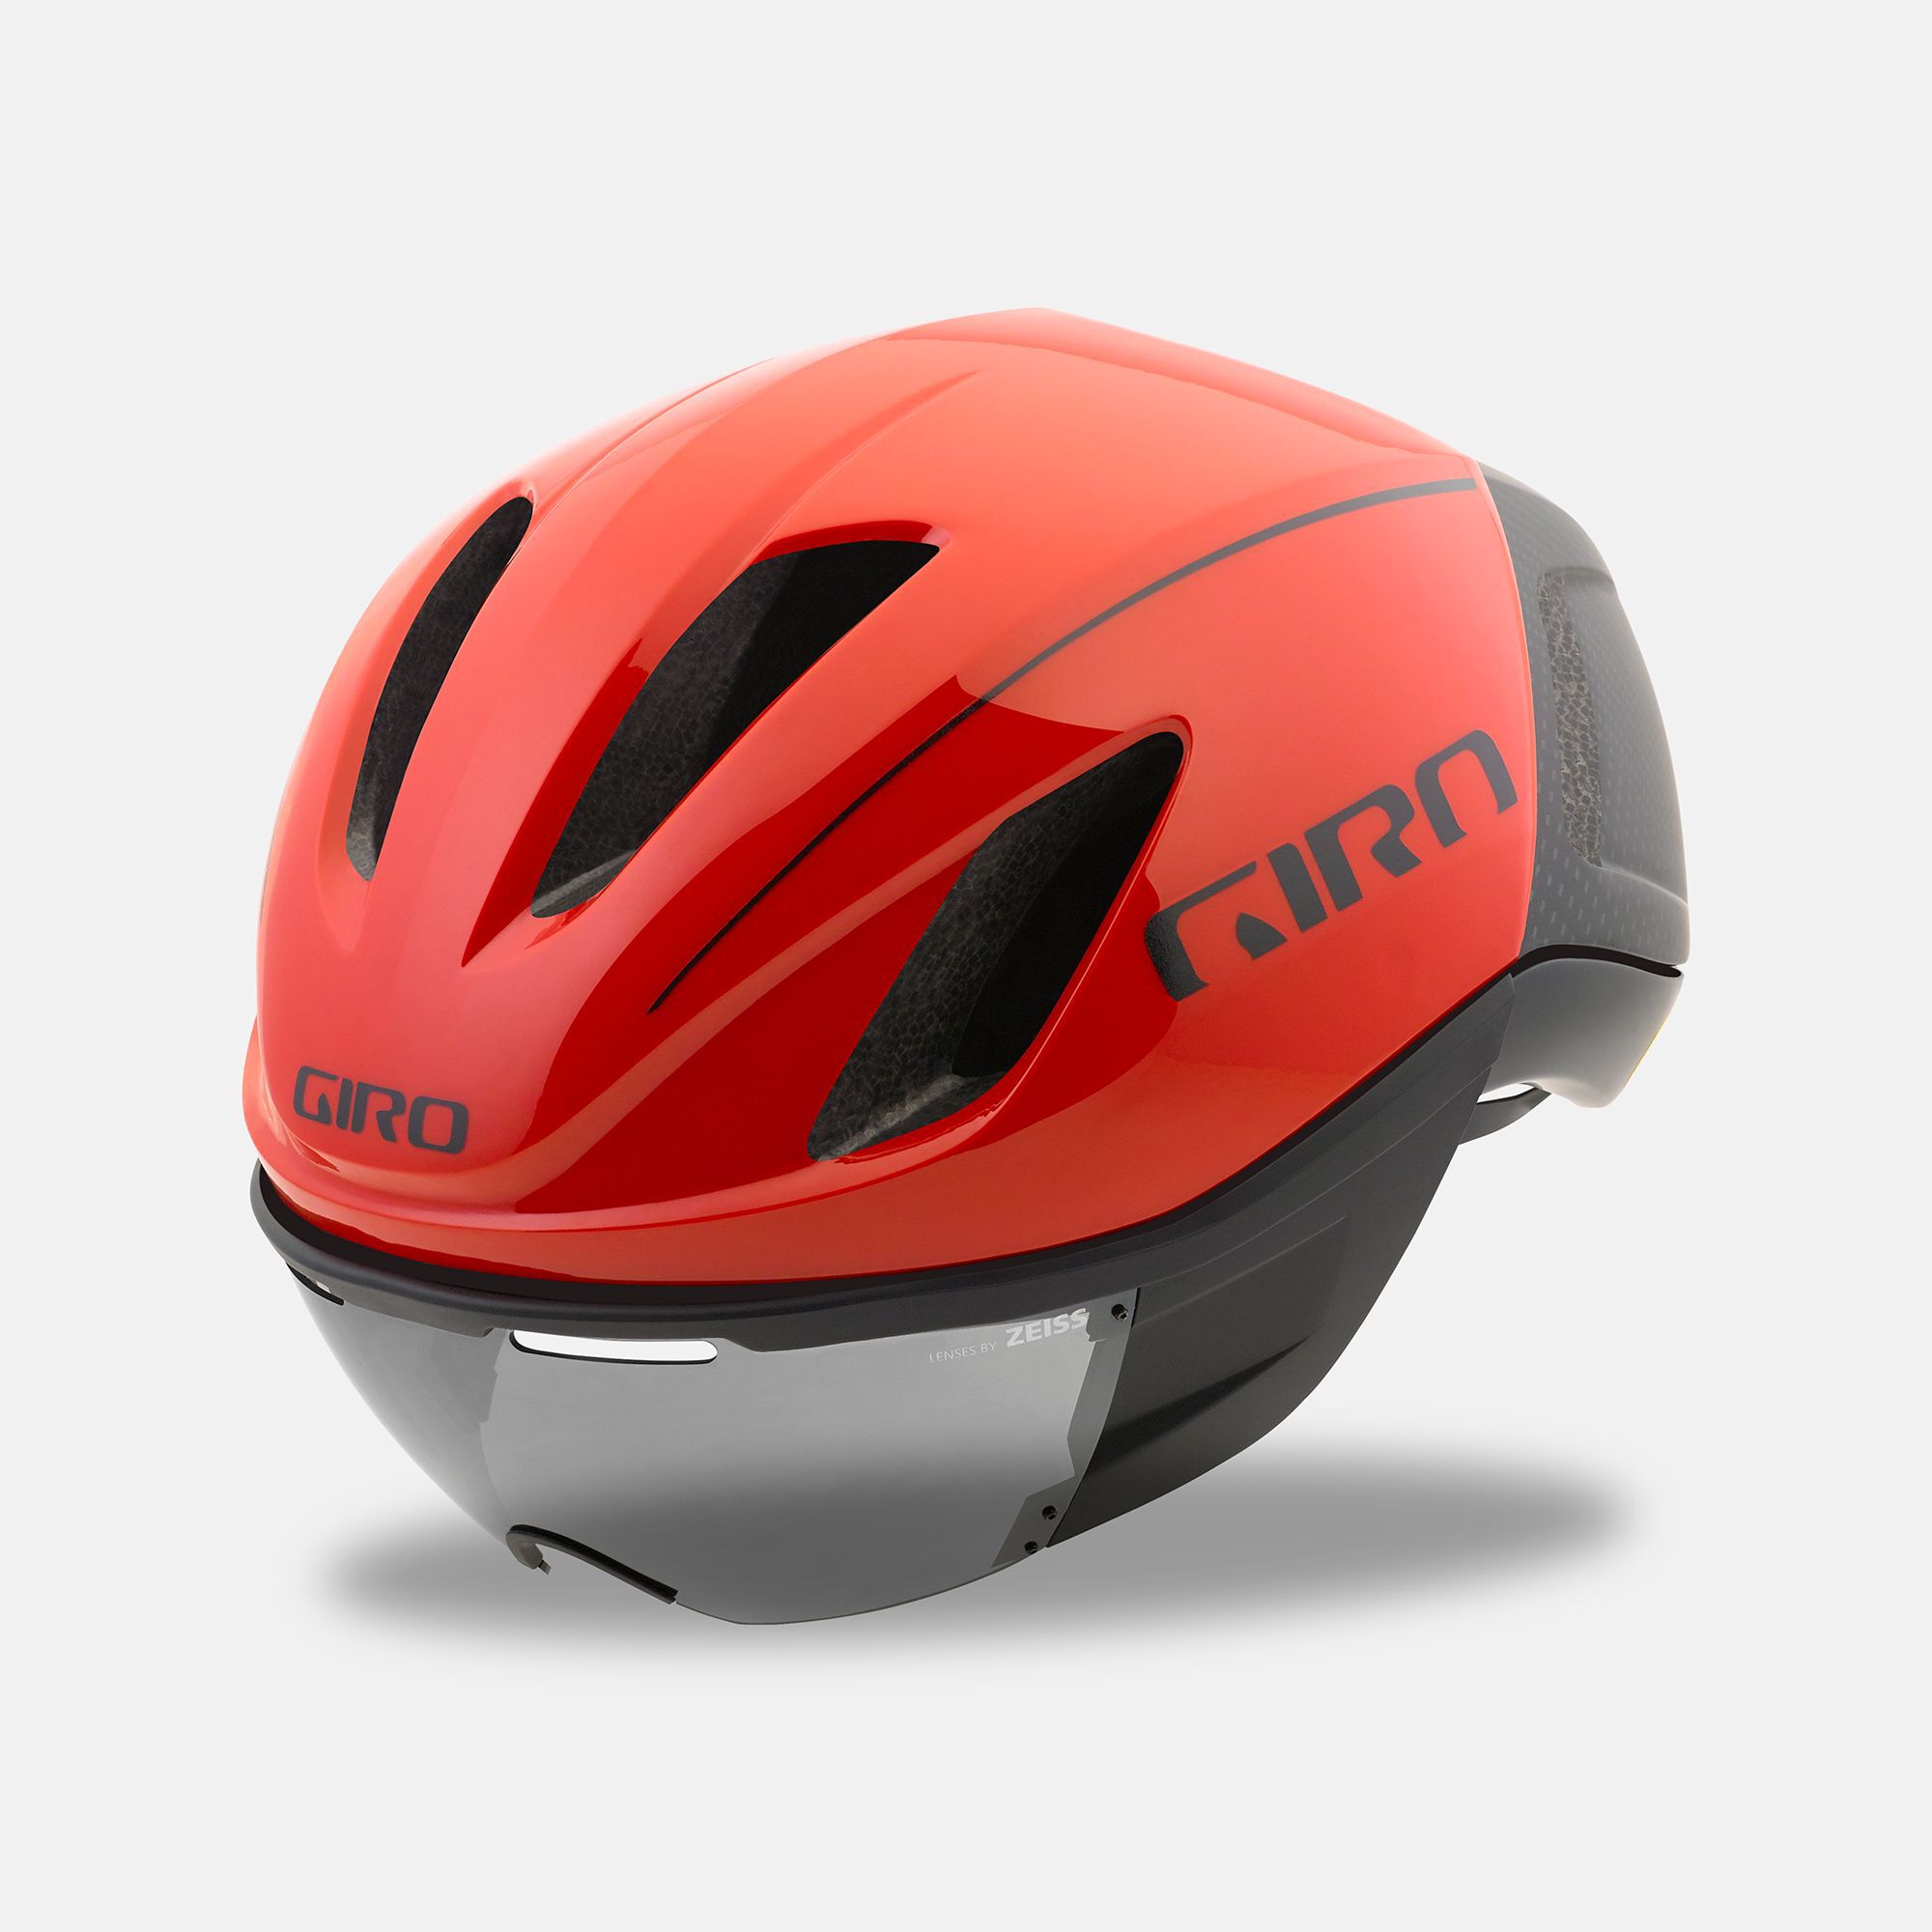 Cycling Helmet Giro Sale Online, 50% OFF | www.ingeniovirtual.com